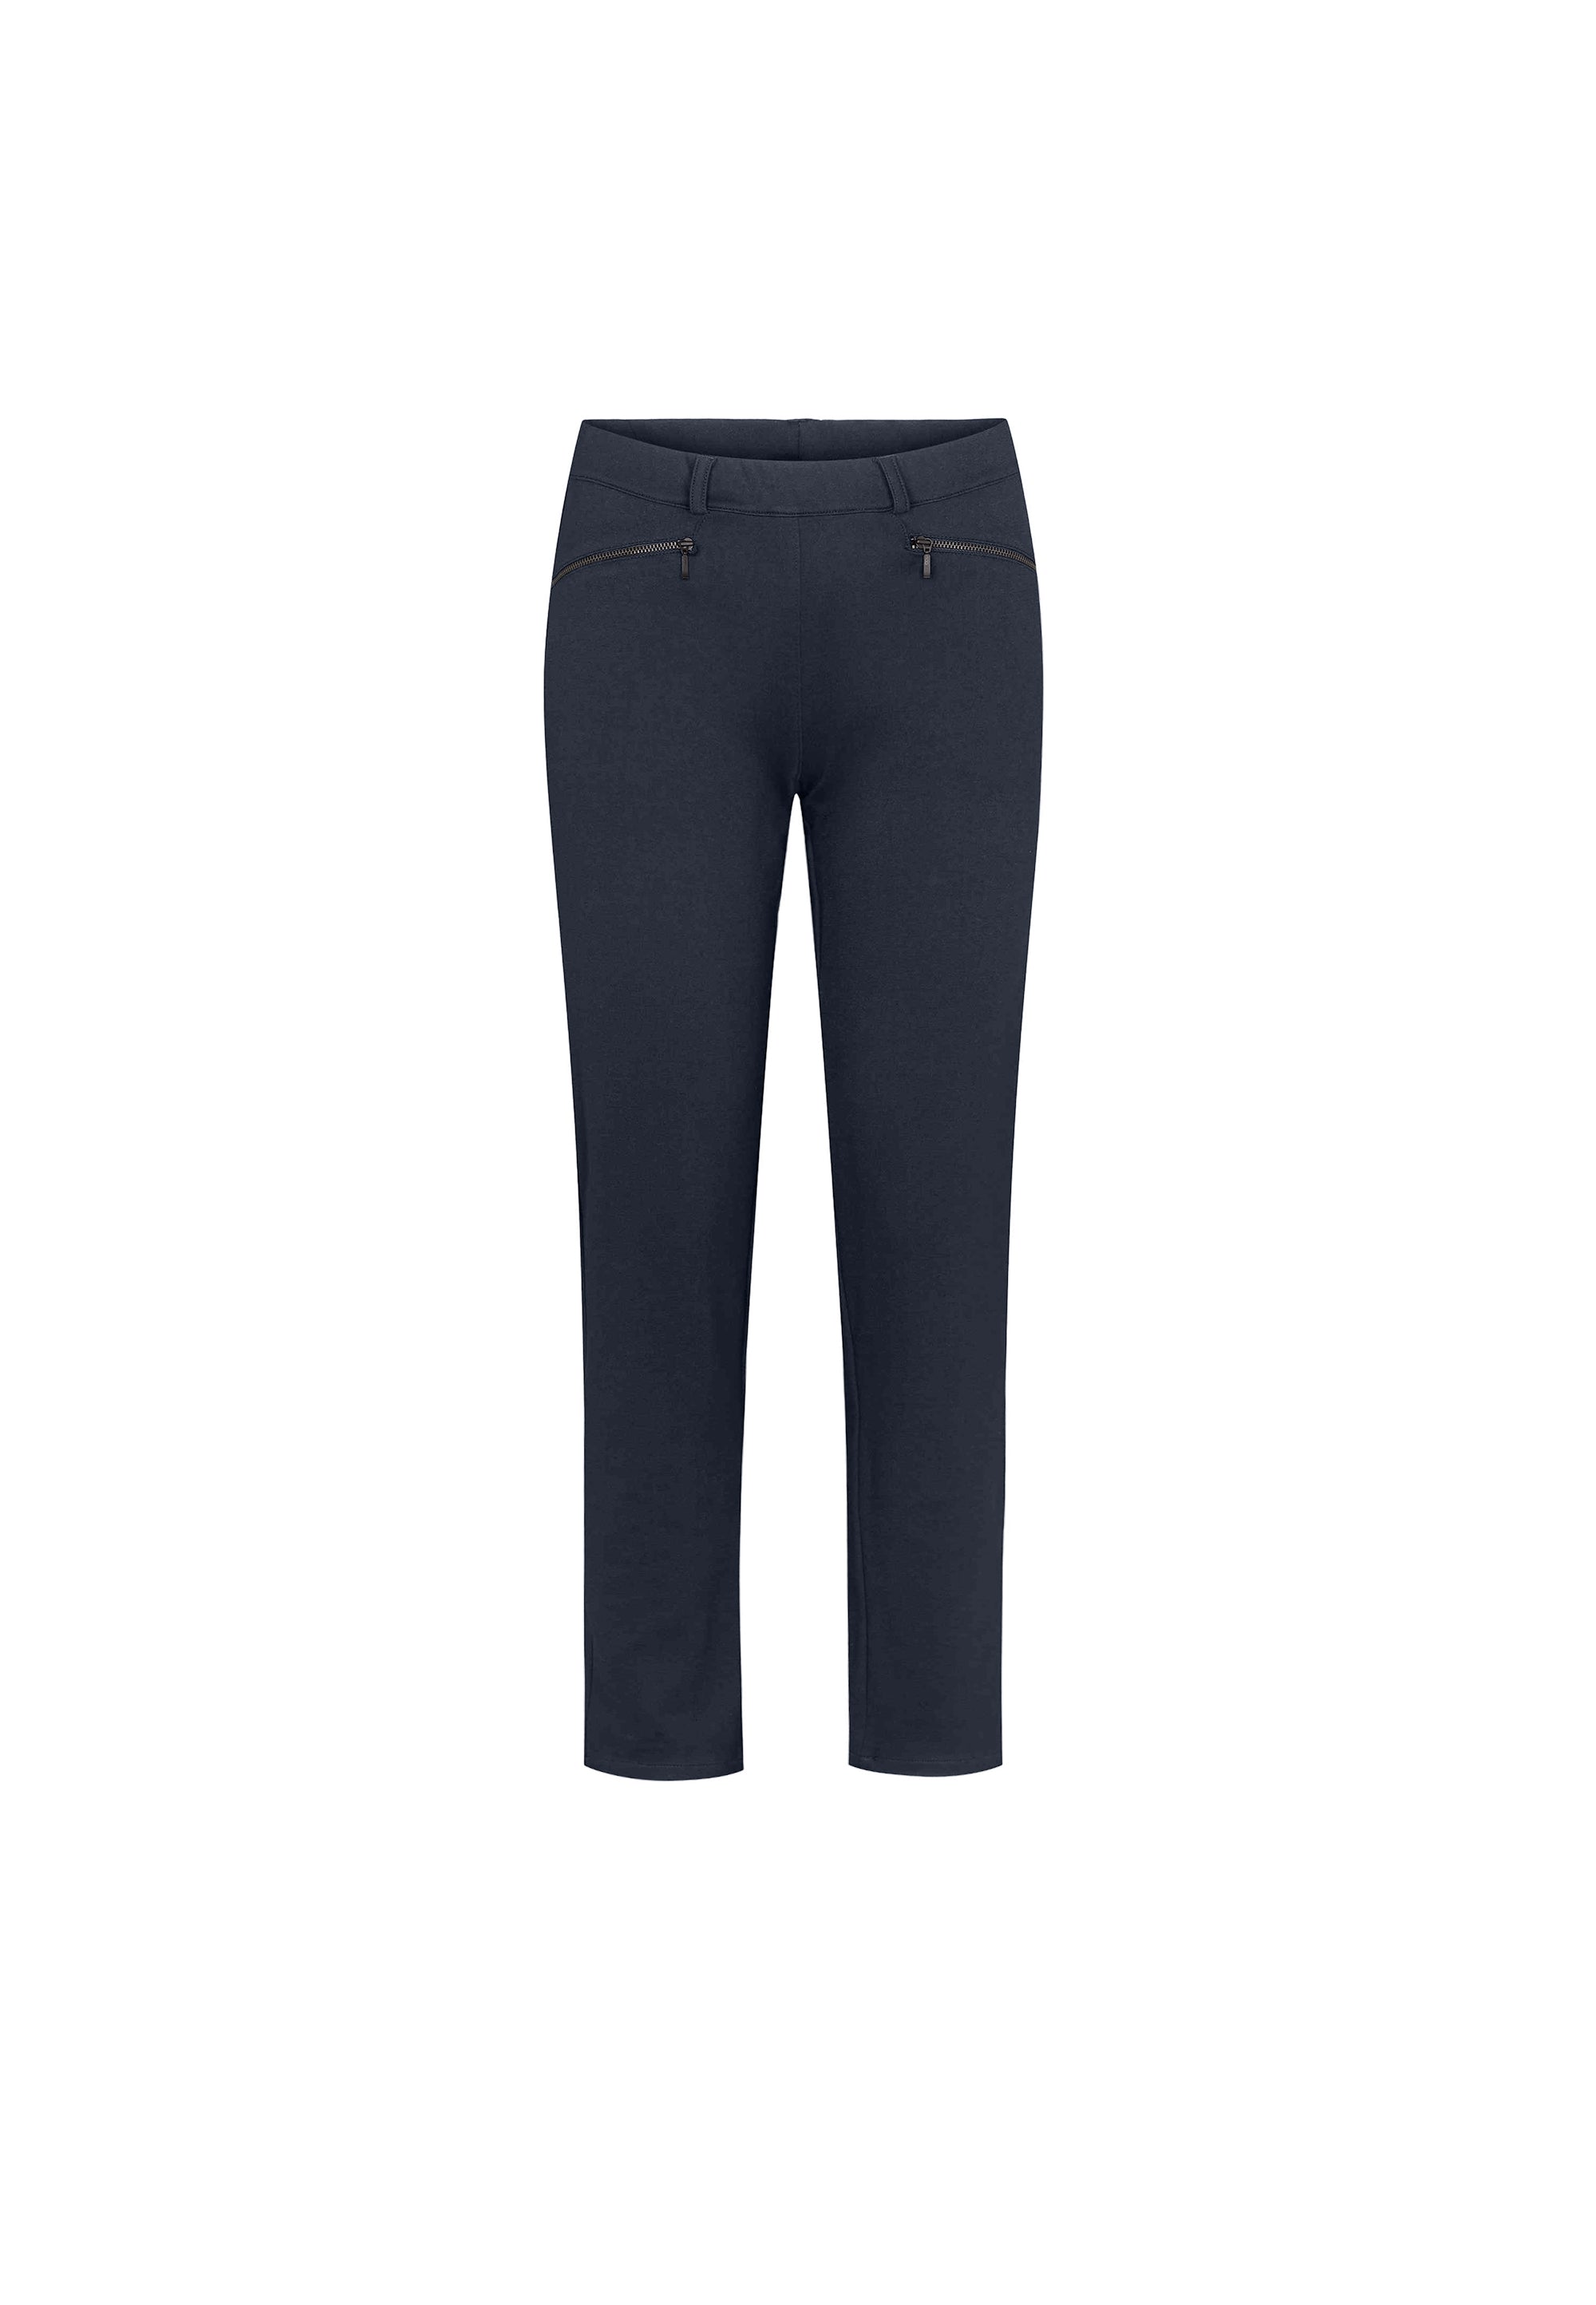 LAURIE  Rylie Regular - Short Length Trousers REGULAR 49103 Navy brushed